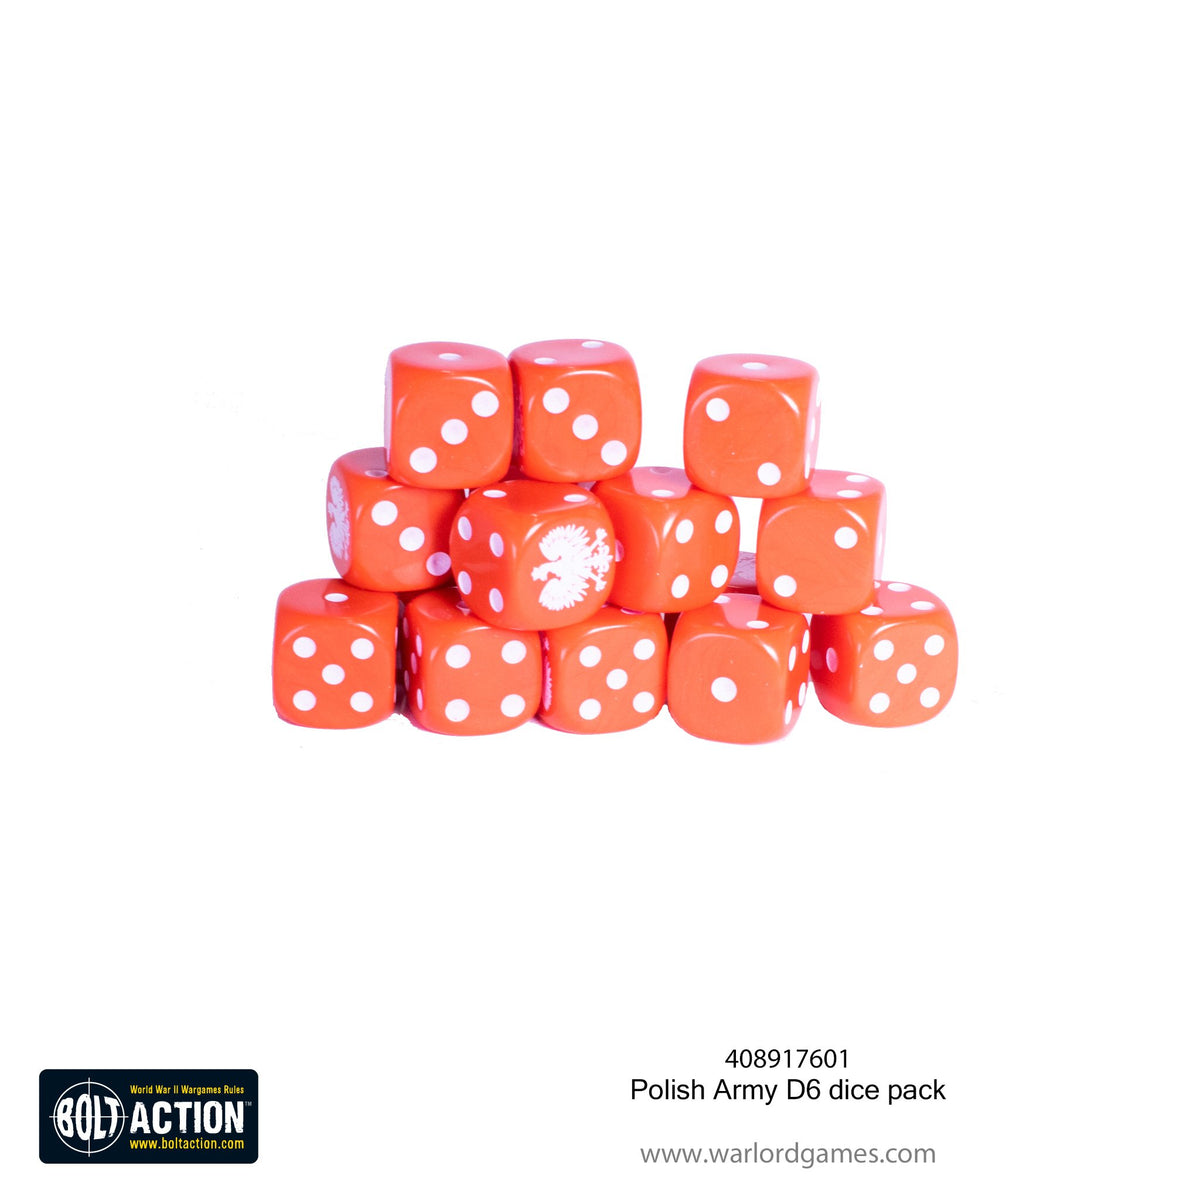 Polish Army D6 dice pack